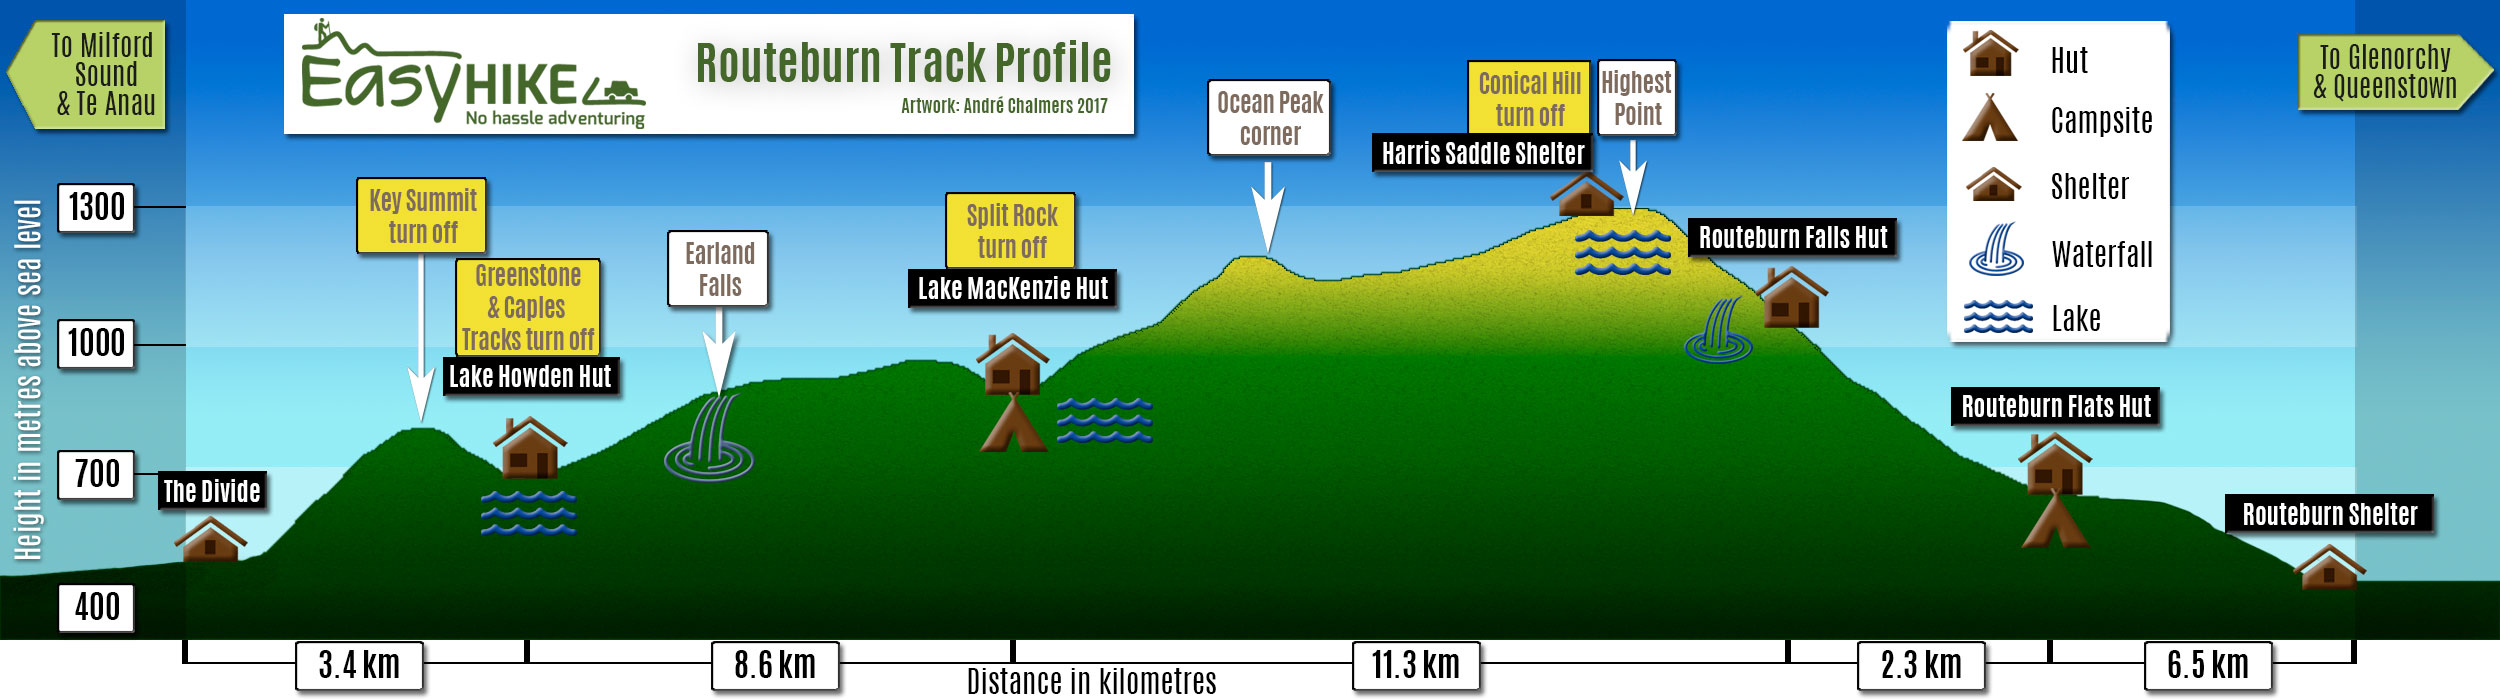 Routeburn Track Profile v2